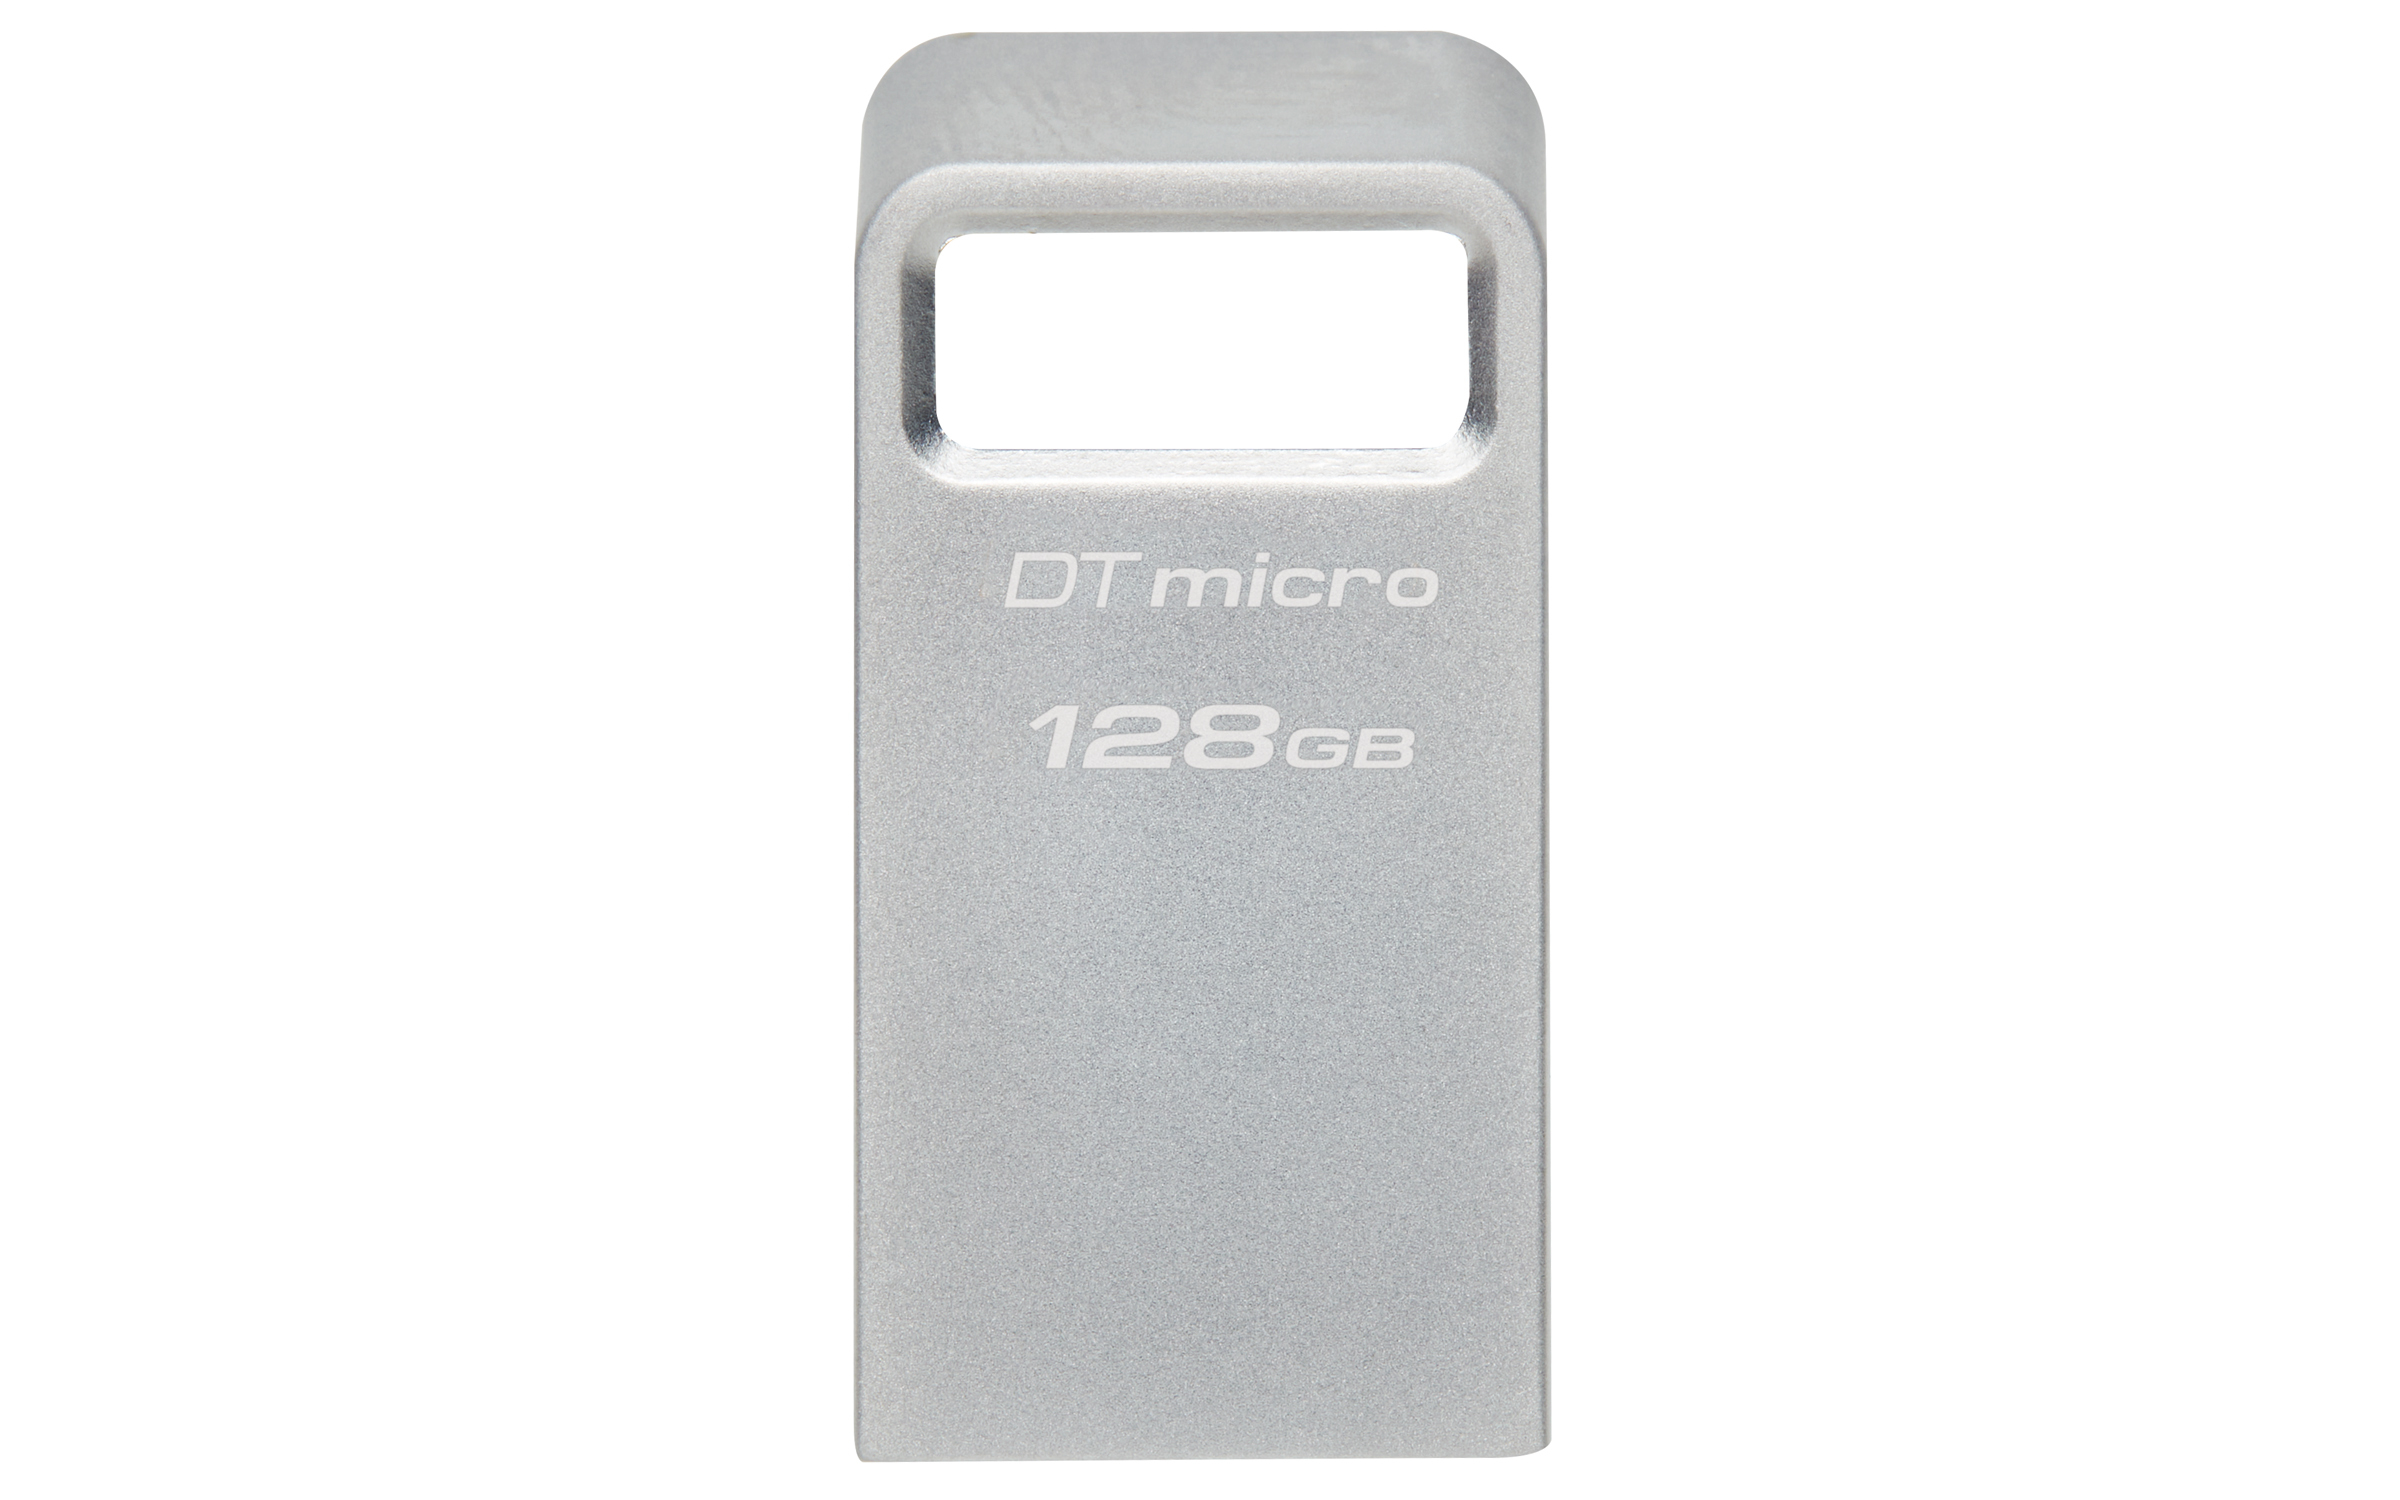 PEN DRIVE 3.2 128GB TYPE-A DT MICRO METALLO 200MB/S LETTURA